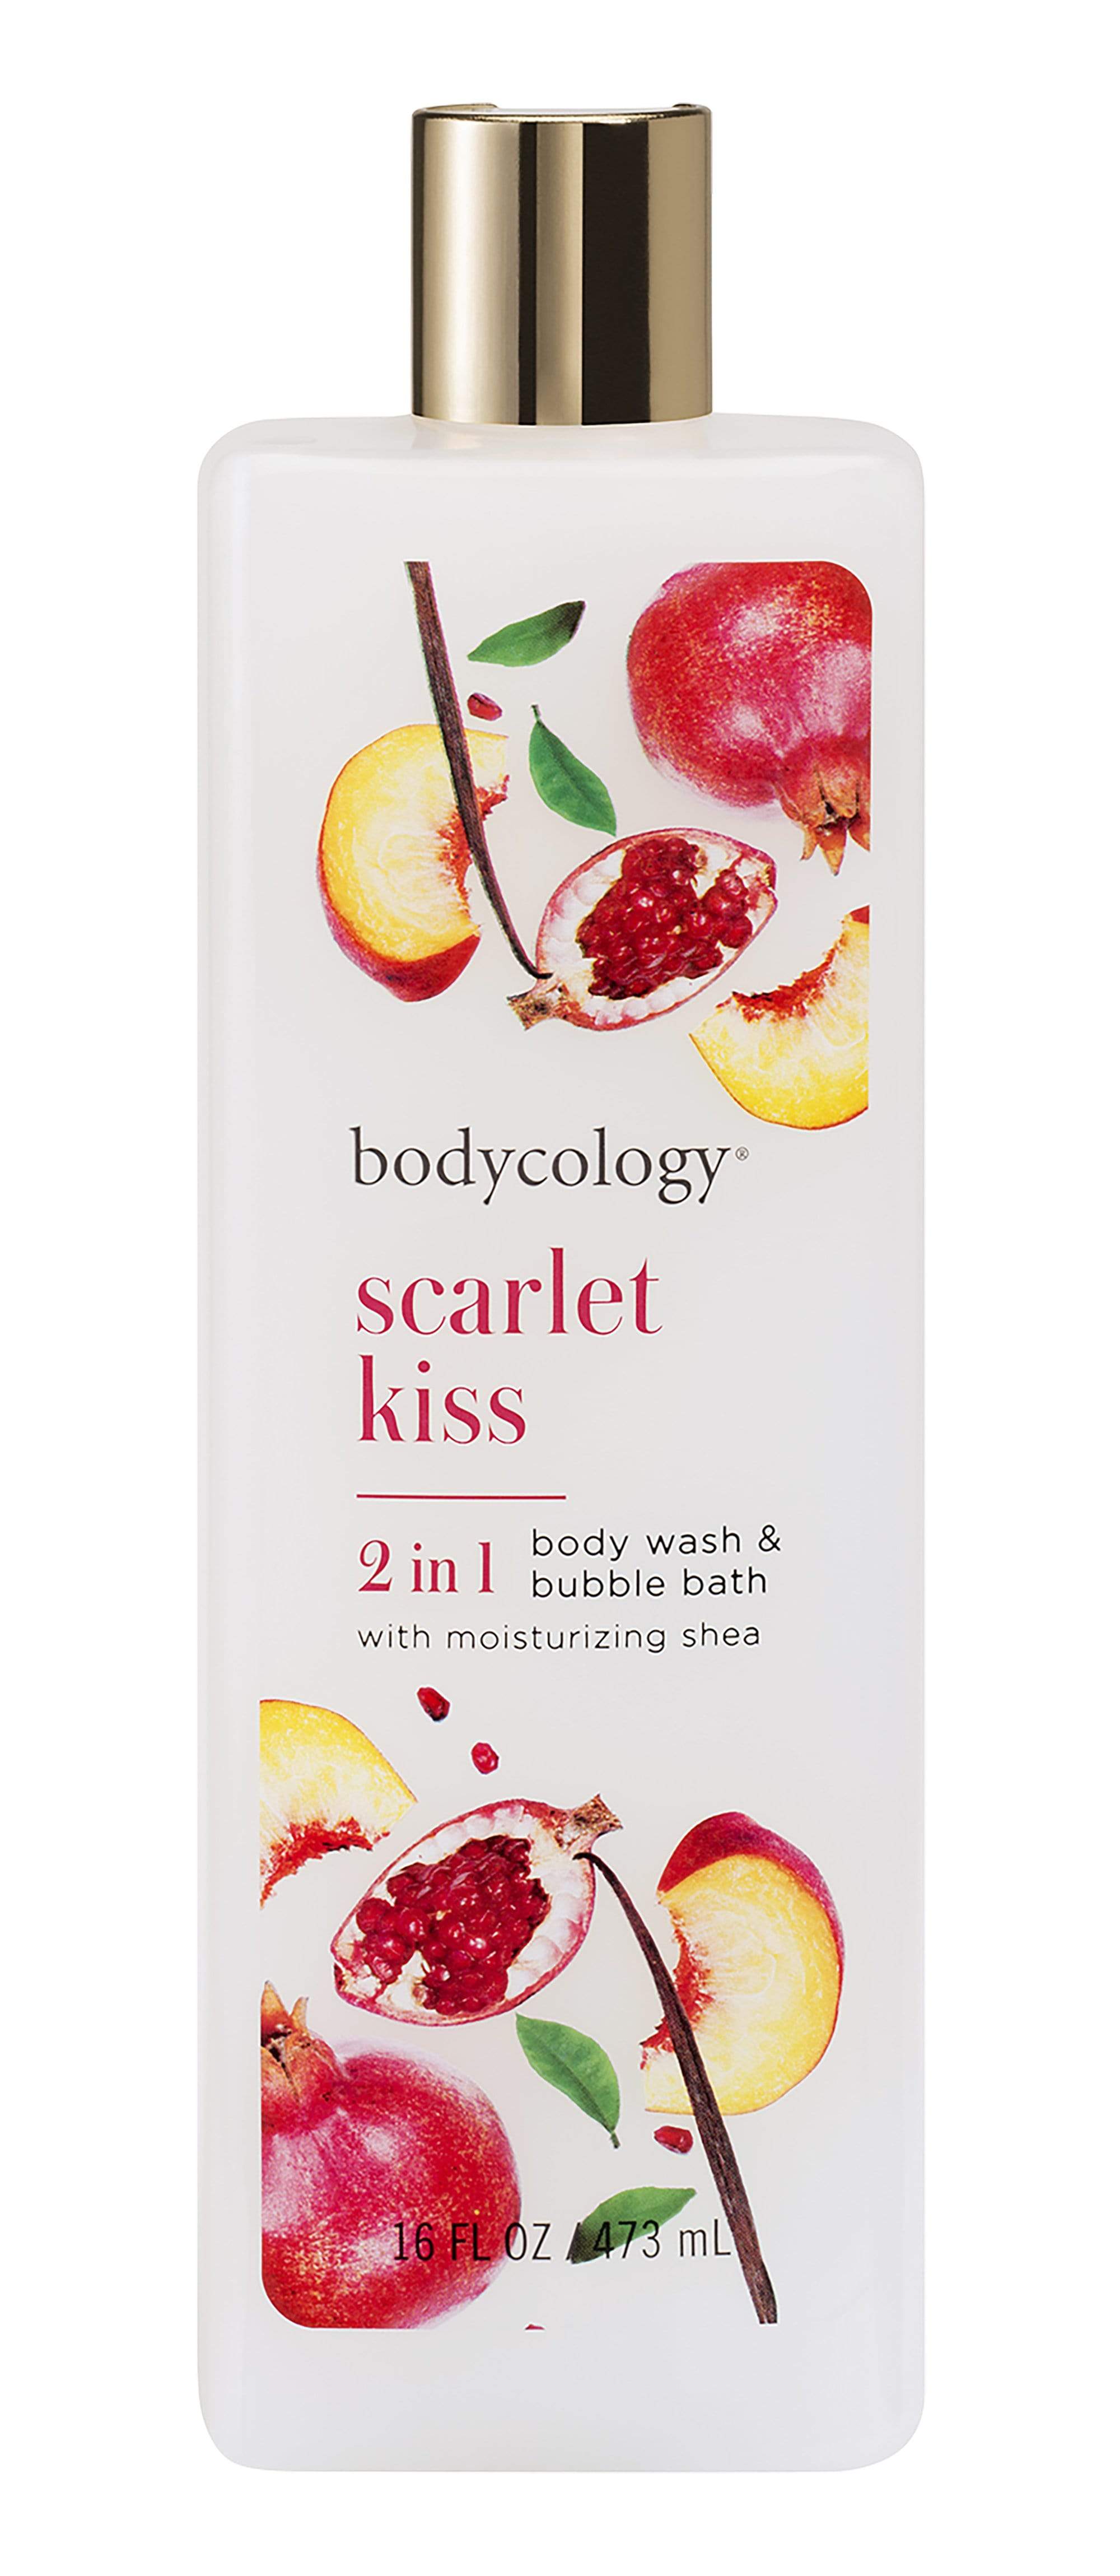 Bodycology Scarlet Kiss Moisturizing Body Wash Shower Gel 473 Ml1021204Pk